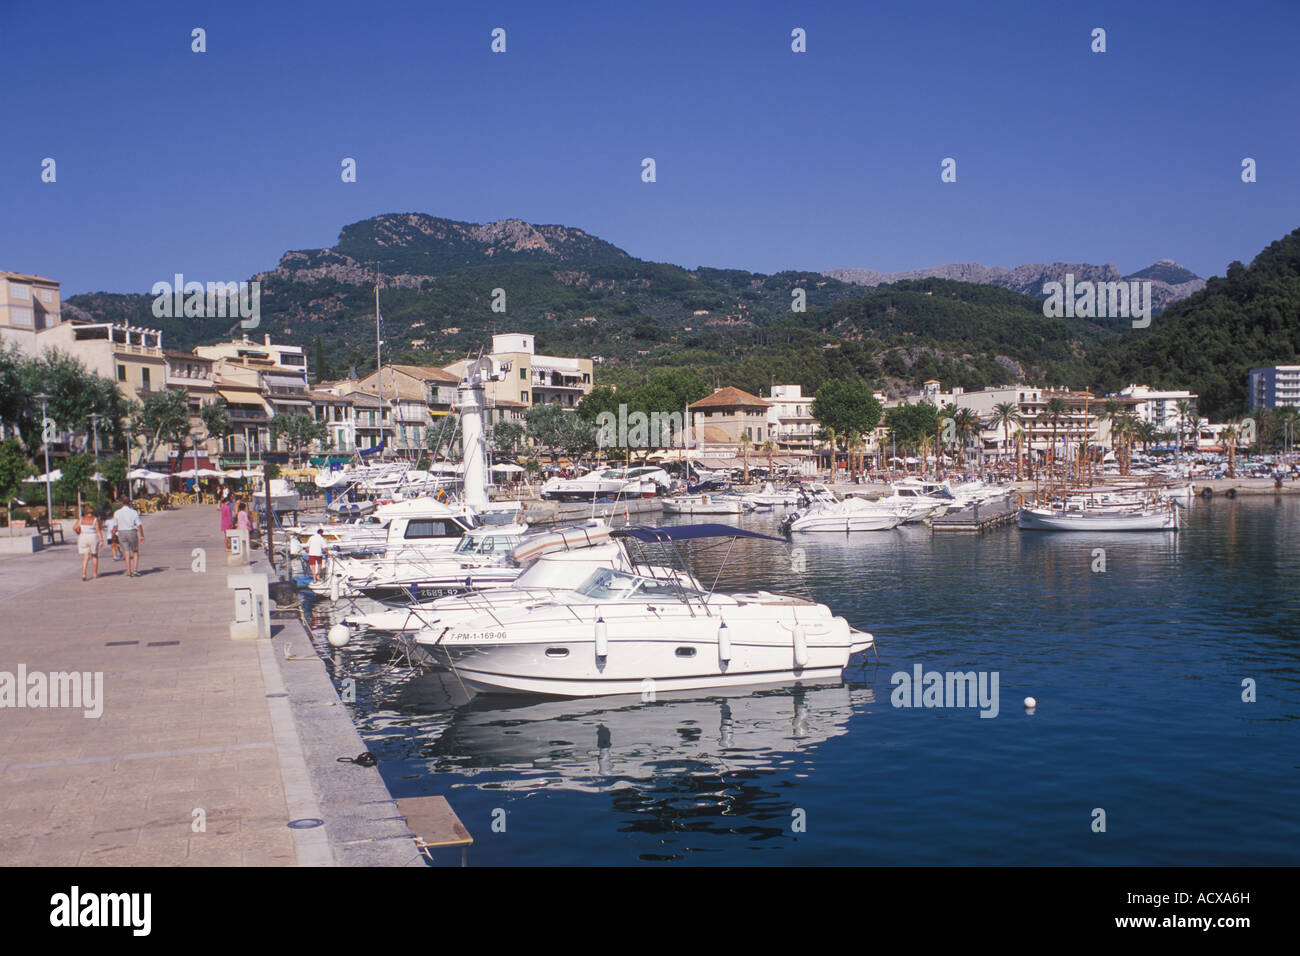 Scene in Puerto Soller marina, North Mallorca, Balearic Islands, Spain. 15th July 2007. Stock Photo